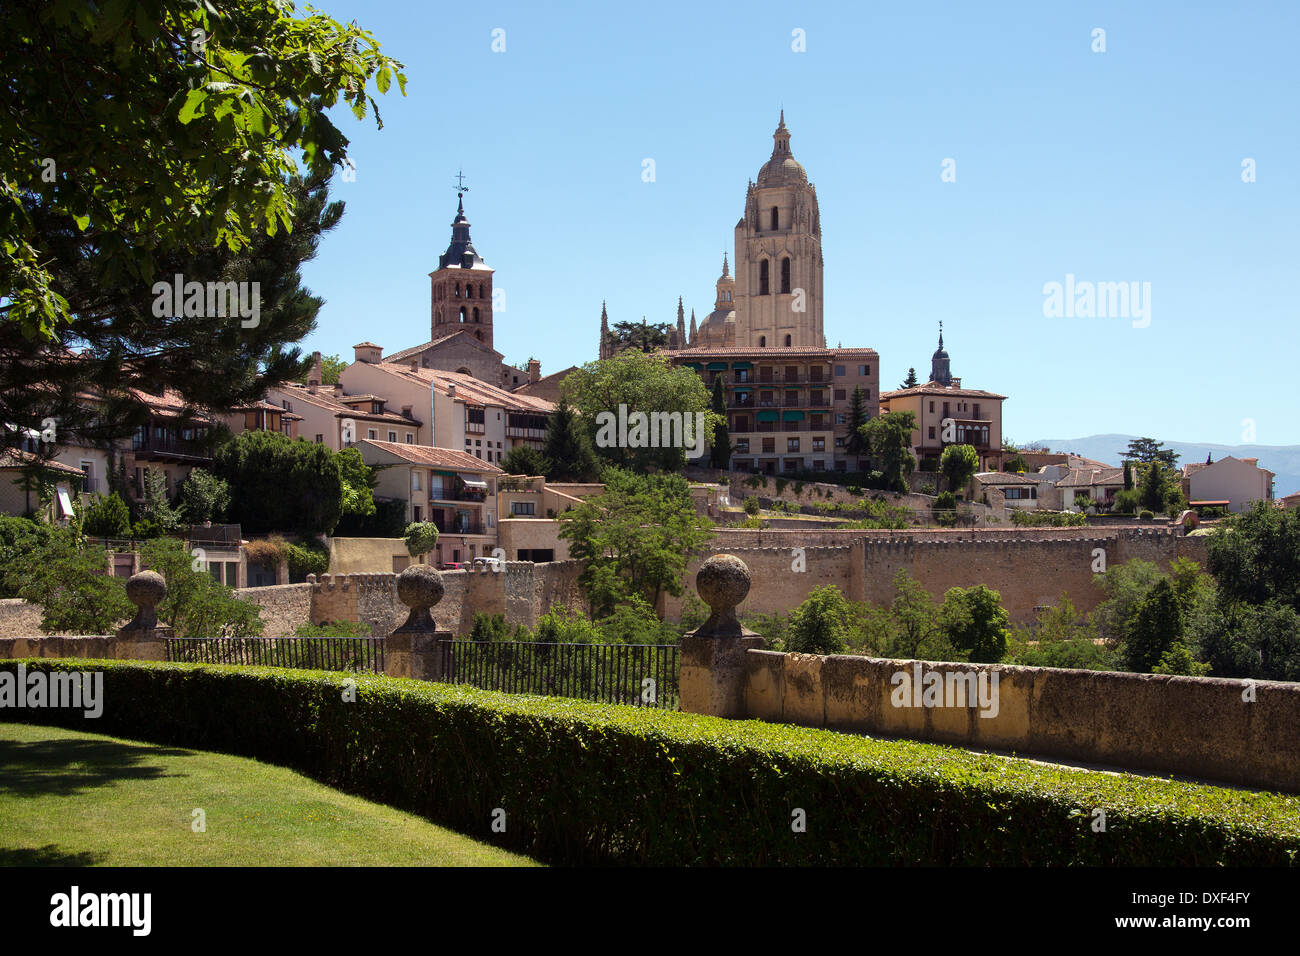 The city of Segovia in central Spain. Stock Photo